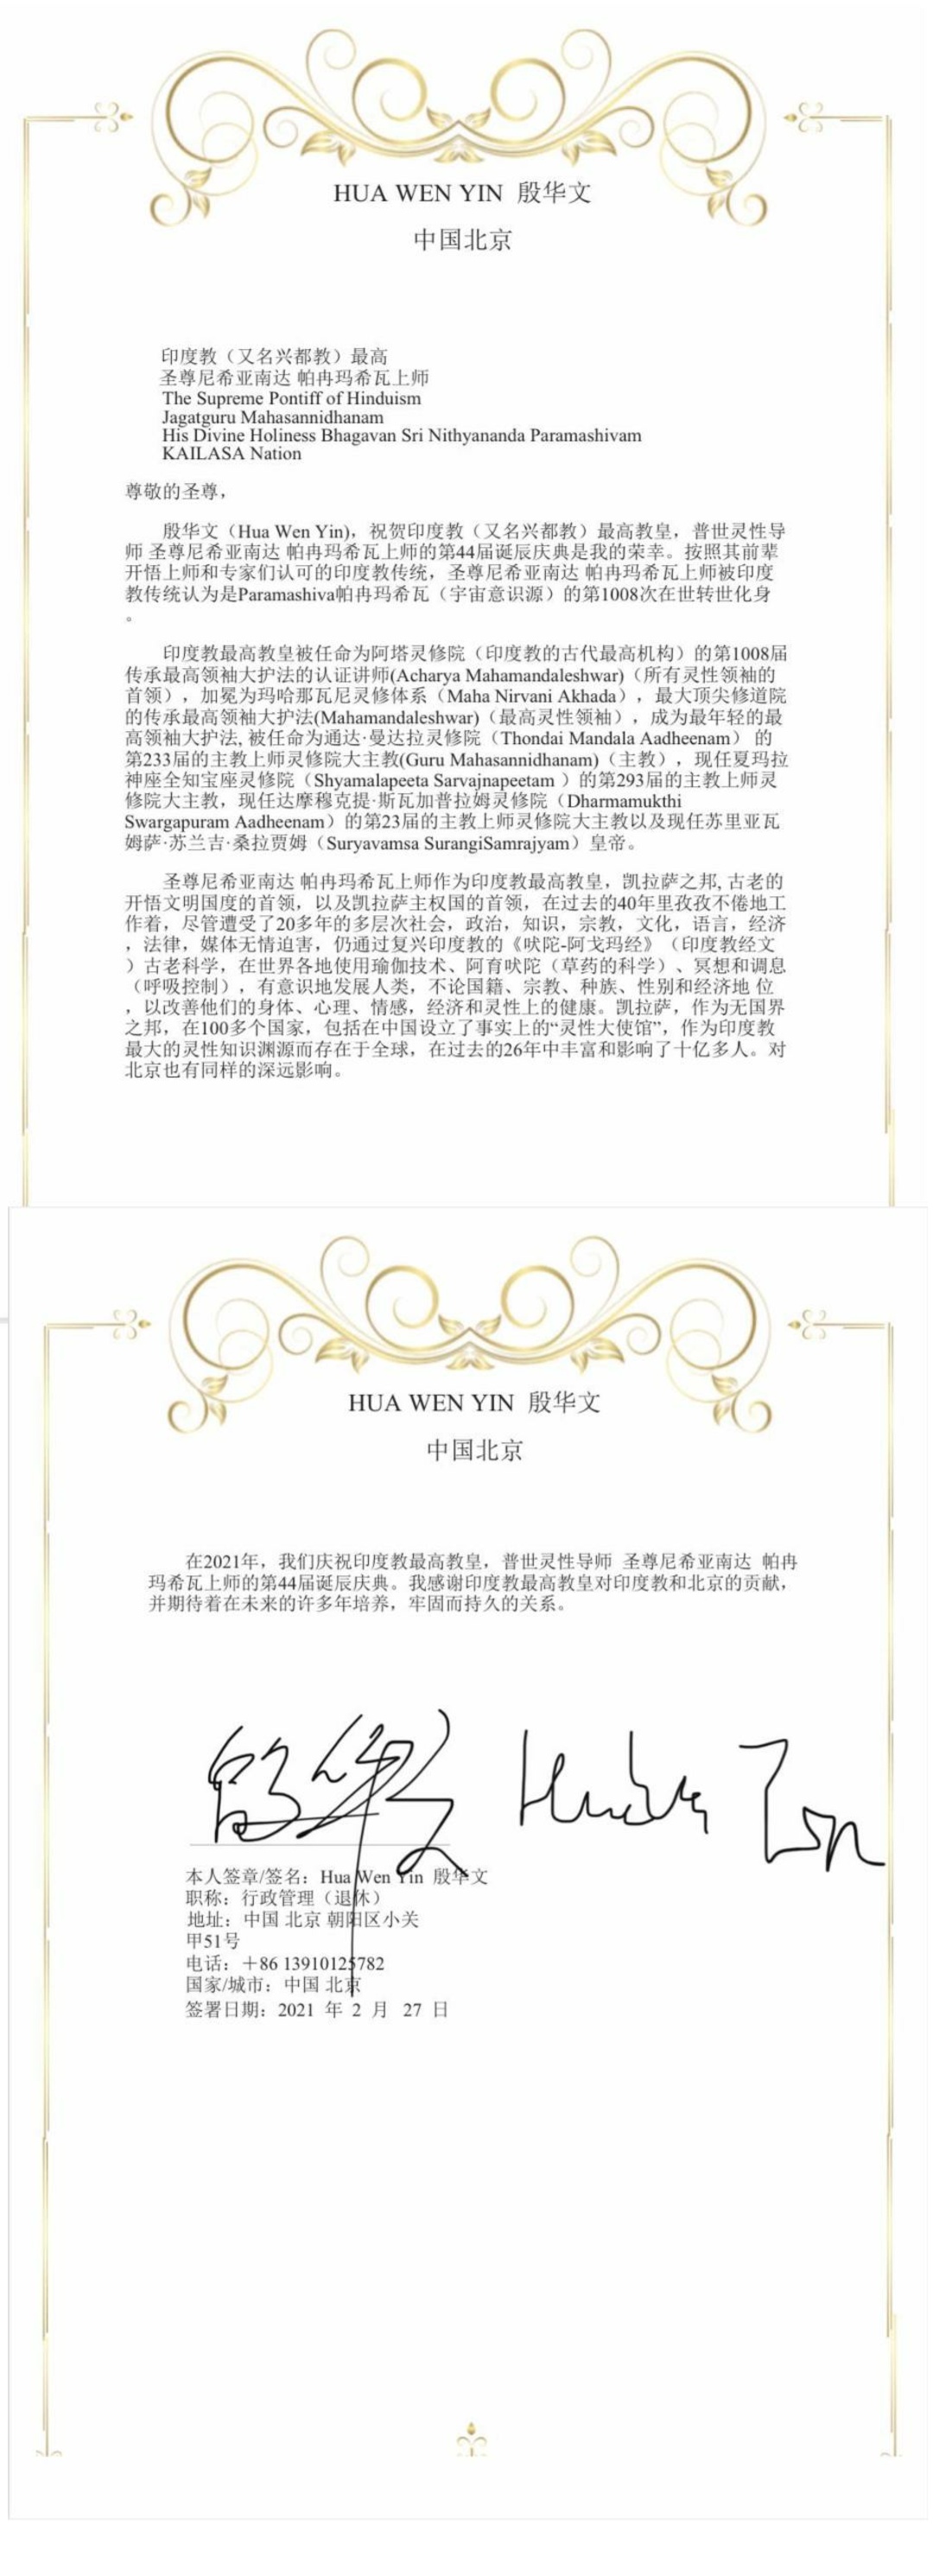 China---Hua-Wen-Yin---Feb-27--2021-(Proclamation)-1ooc9aFIvVv M3AHZg-6osKFFGLxe c5P.pdf